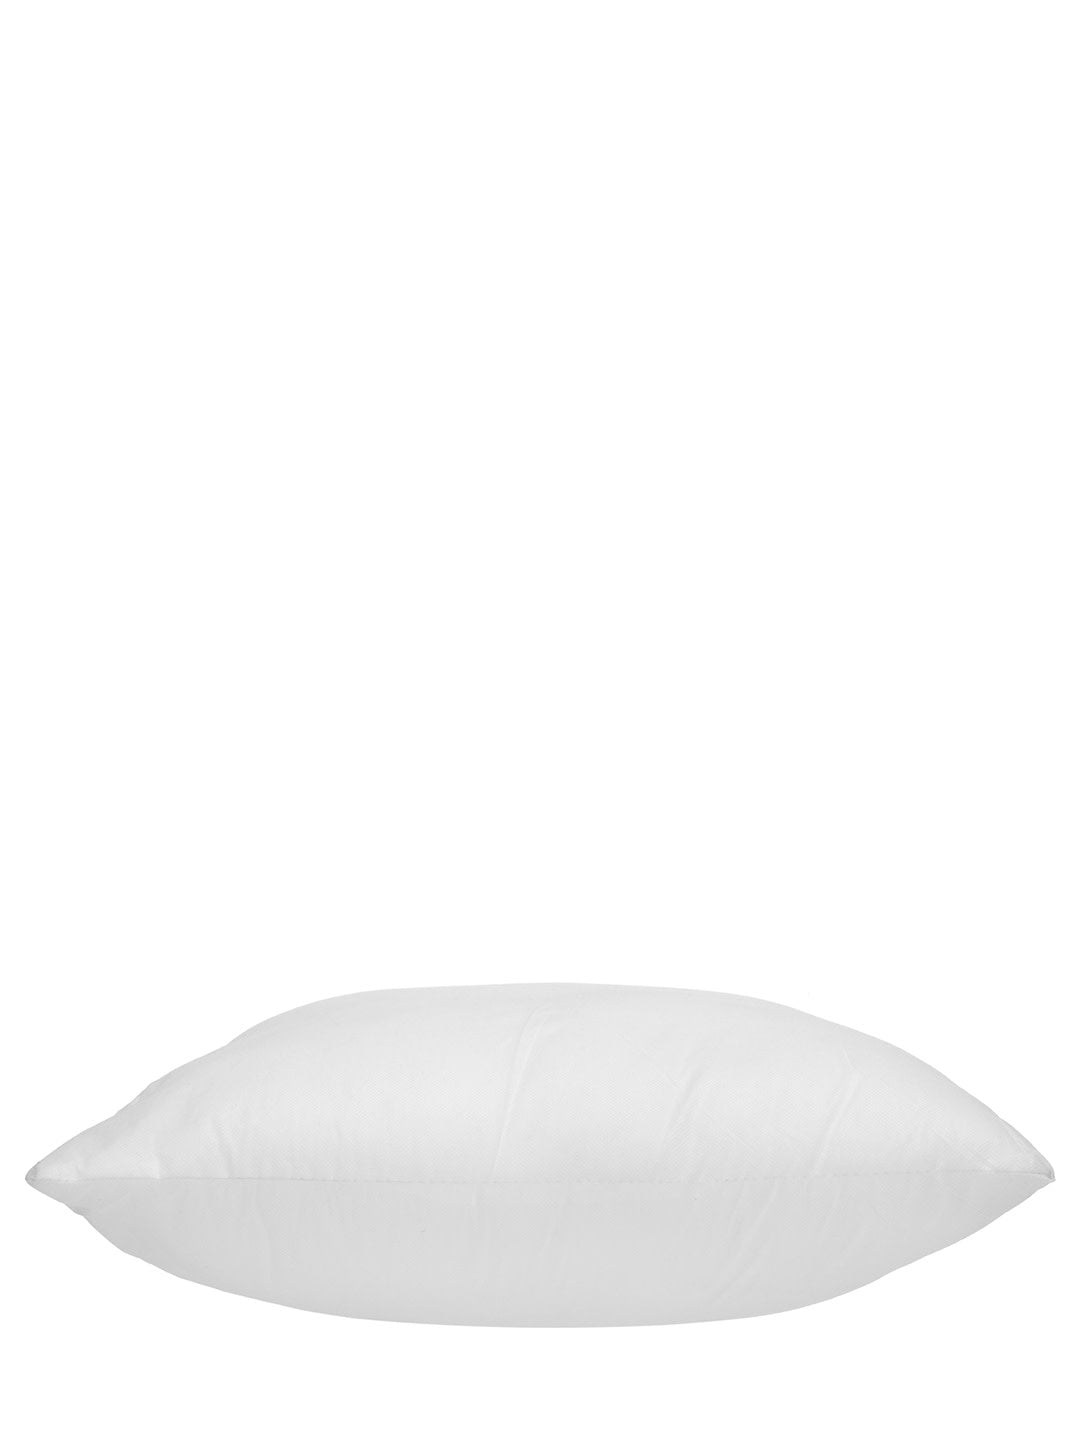 White Set of 3 Plain Cushion Fillers, 45 cm x 45 cm